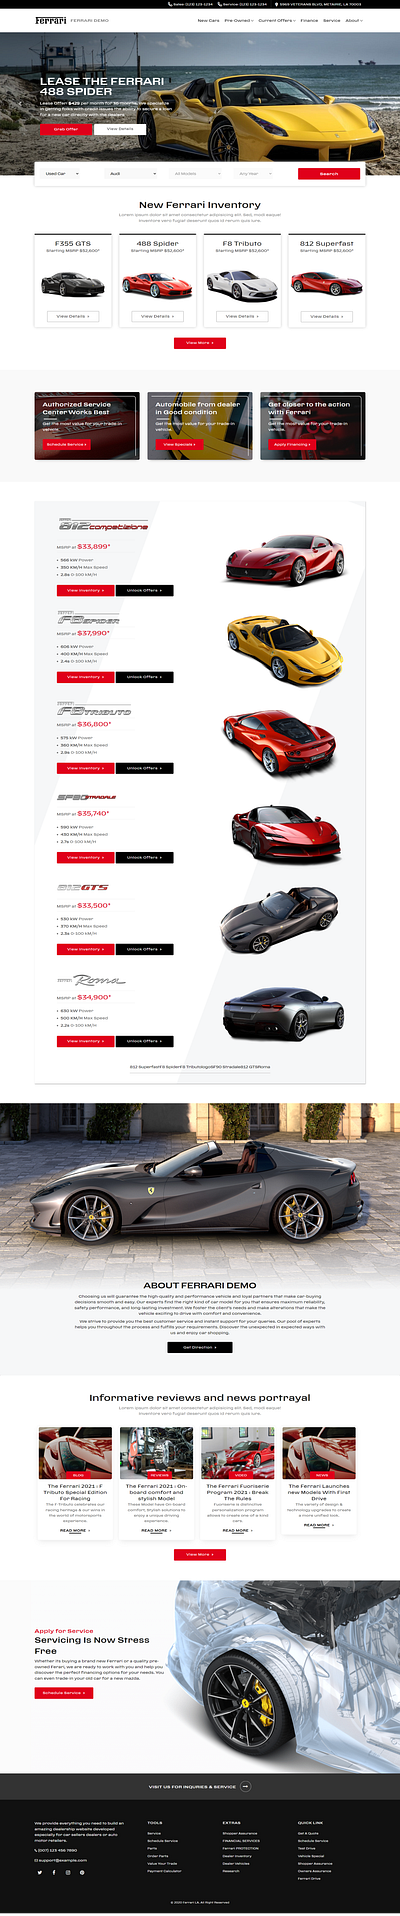 Ferrari Dealership Web Design car dealership design ferrari web design